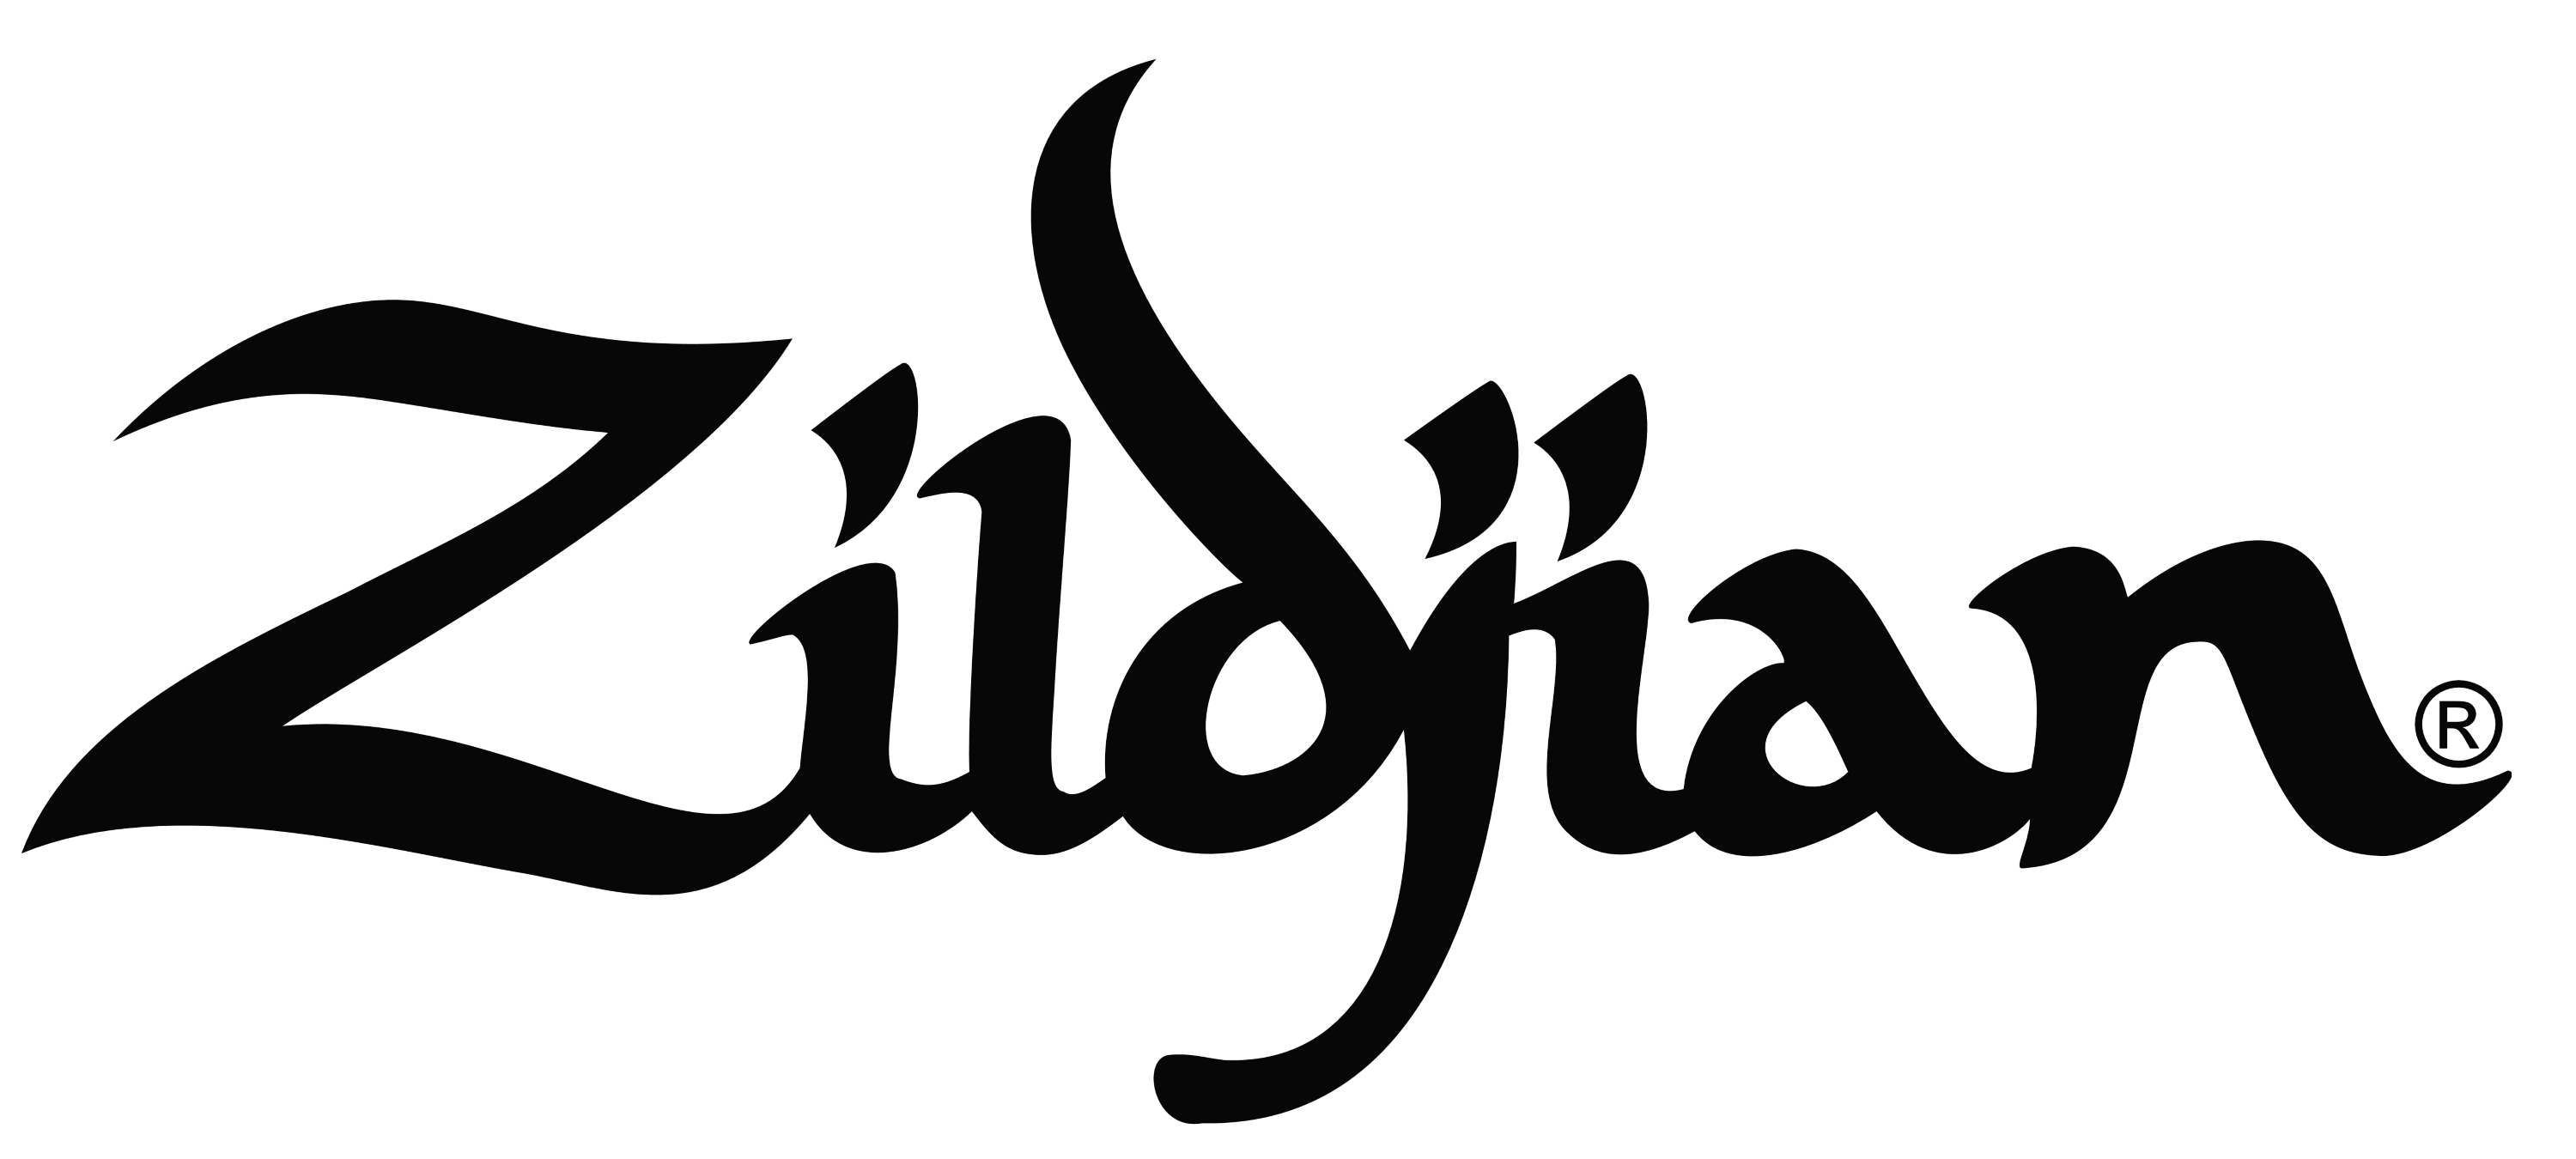 Zildjian logo, logotype